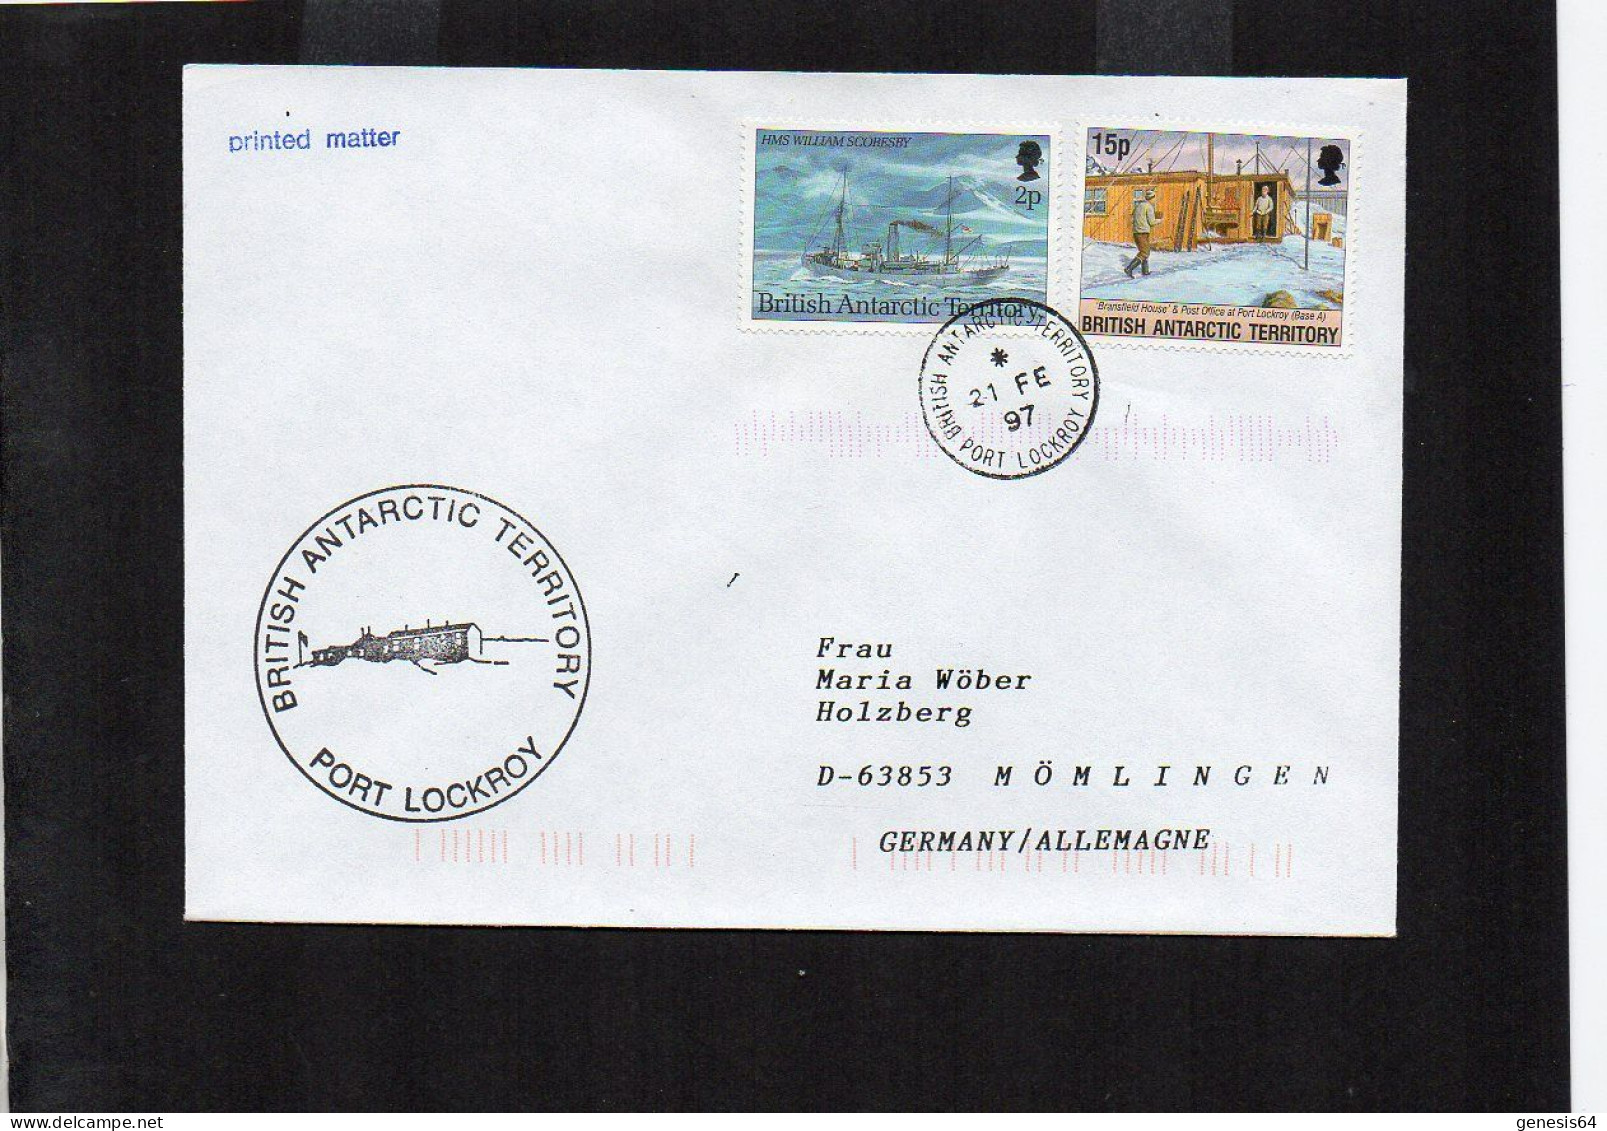 British Antarctic Territory (BAT) 1997 Cover - Port Lockroy 21 FE 97 - (1ATK024) - Briefe U. Dokumente